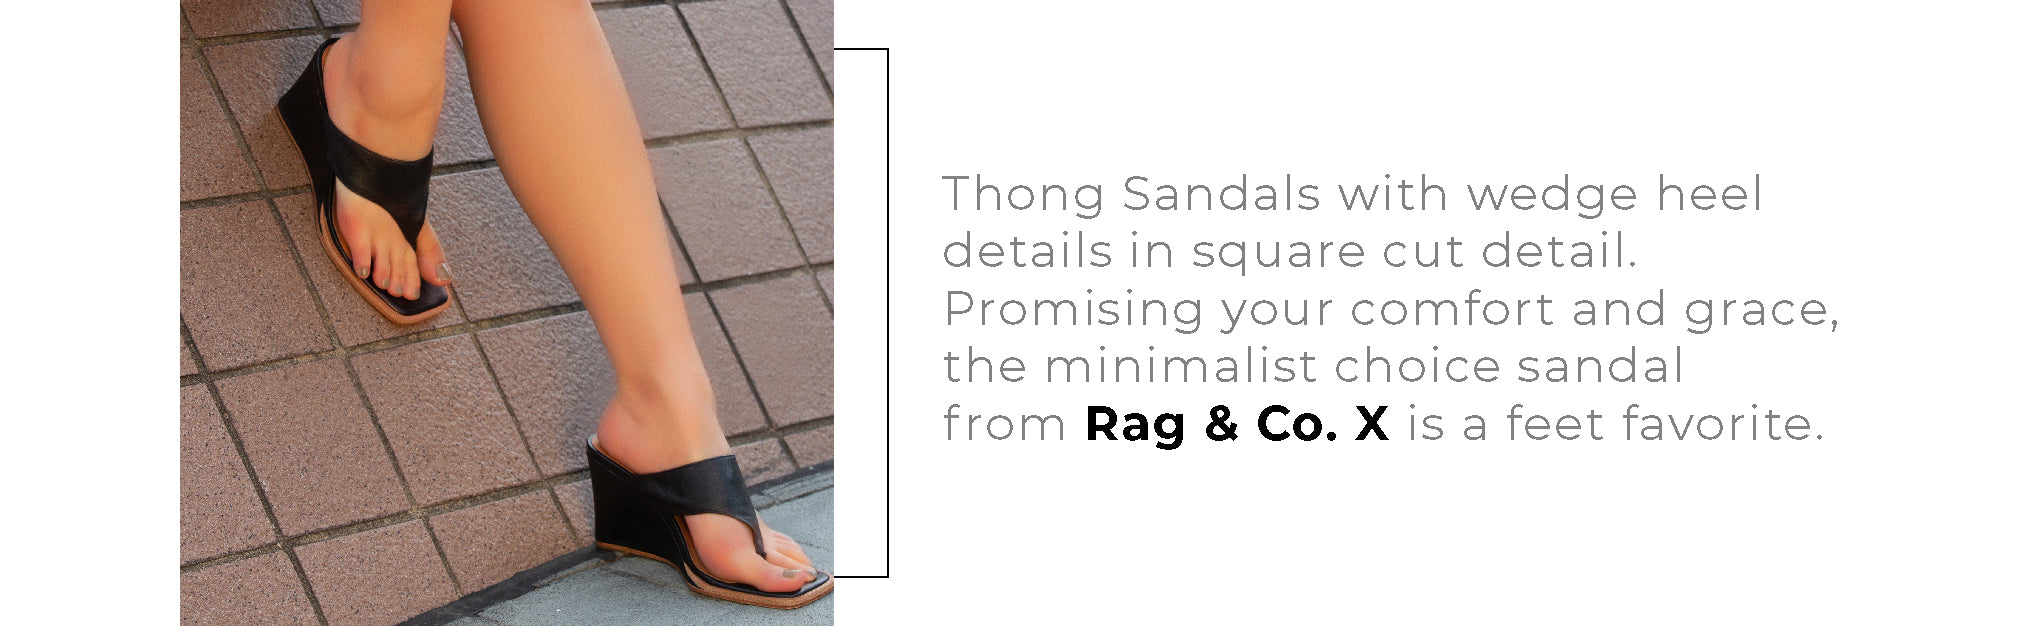 ONASSIS Black Thong Wedge Sandals